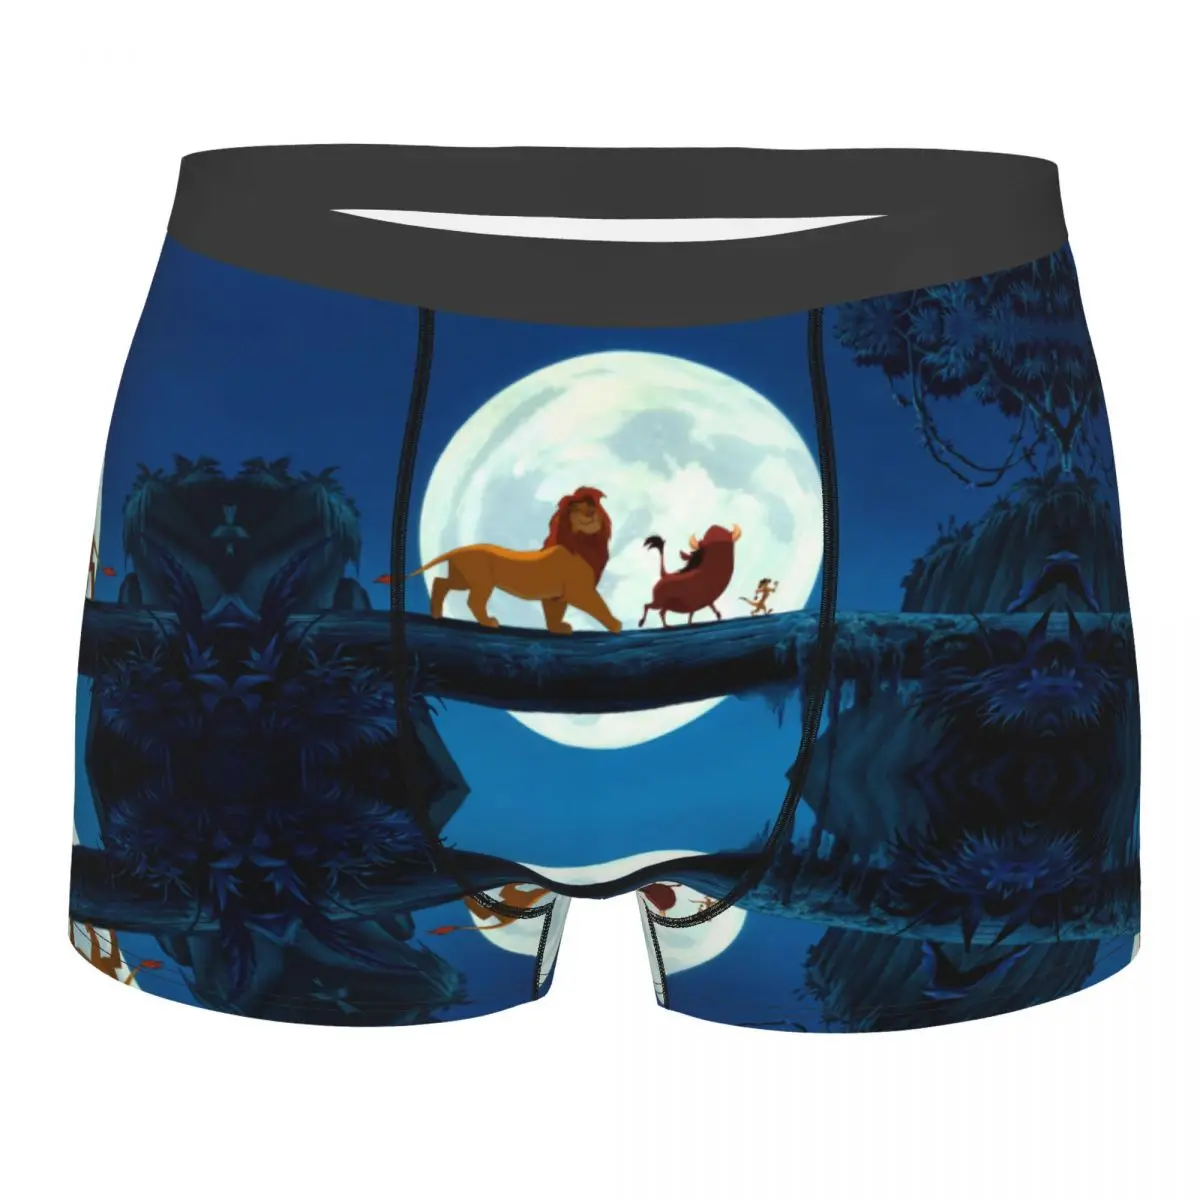 

Disney Walk Grown King Lion Underwear Male Printed Hakuna Matata Cartoon Movie Boxer Briefs Shorts Panties Soft Underpants